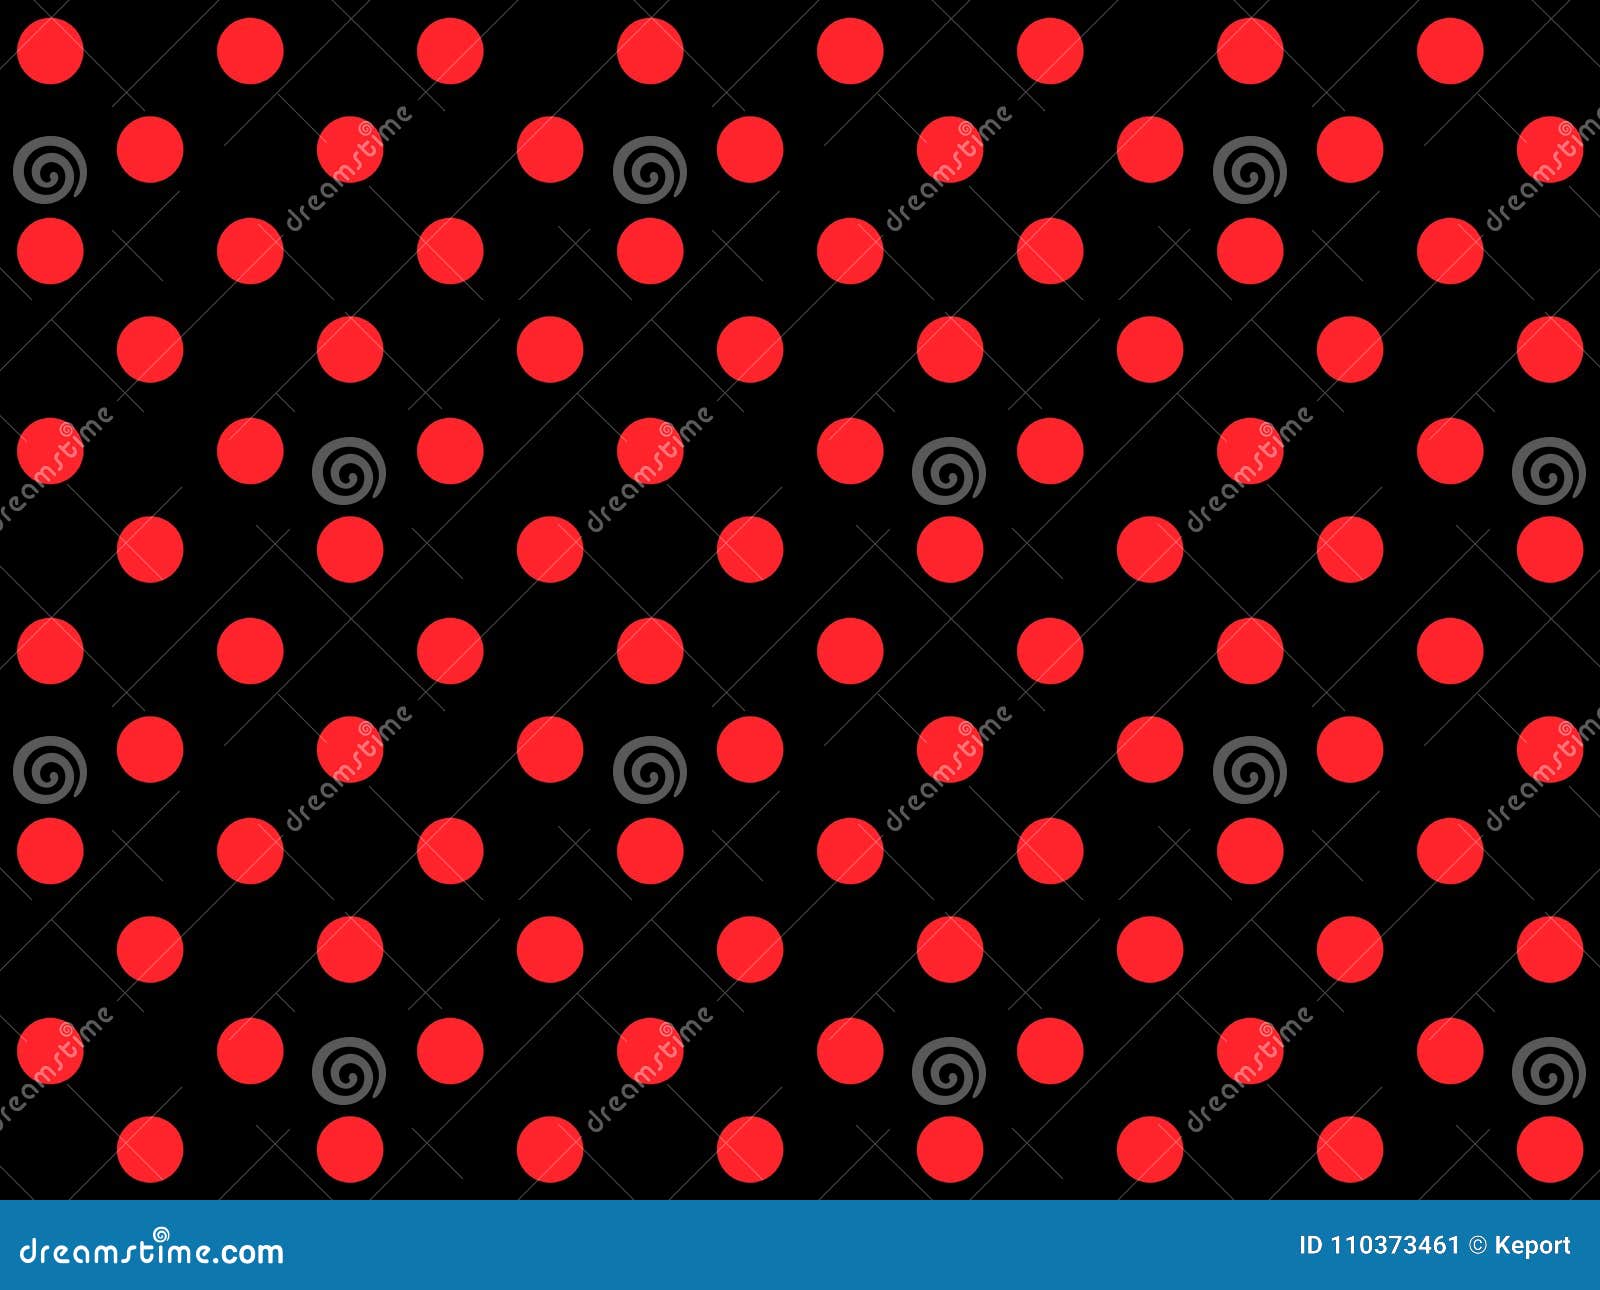 Polka Dot Background Red Black Stock Illustration